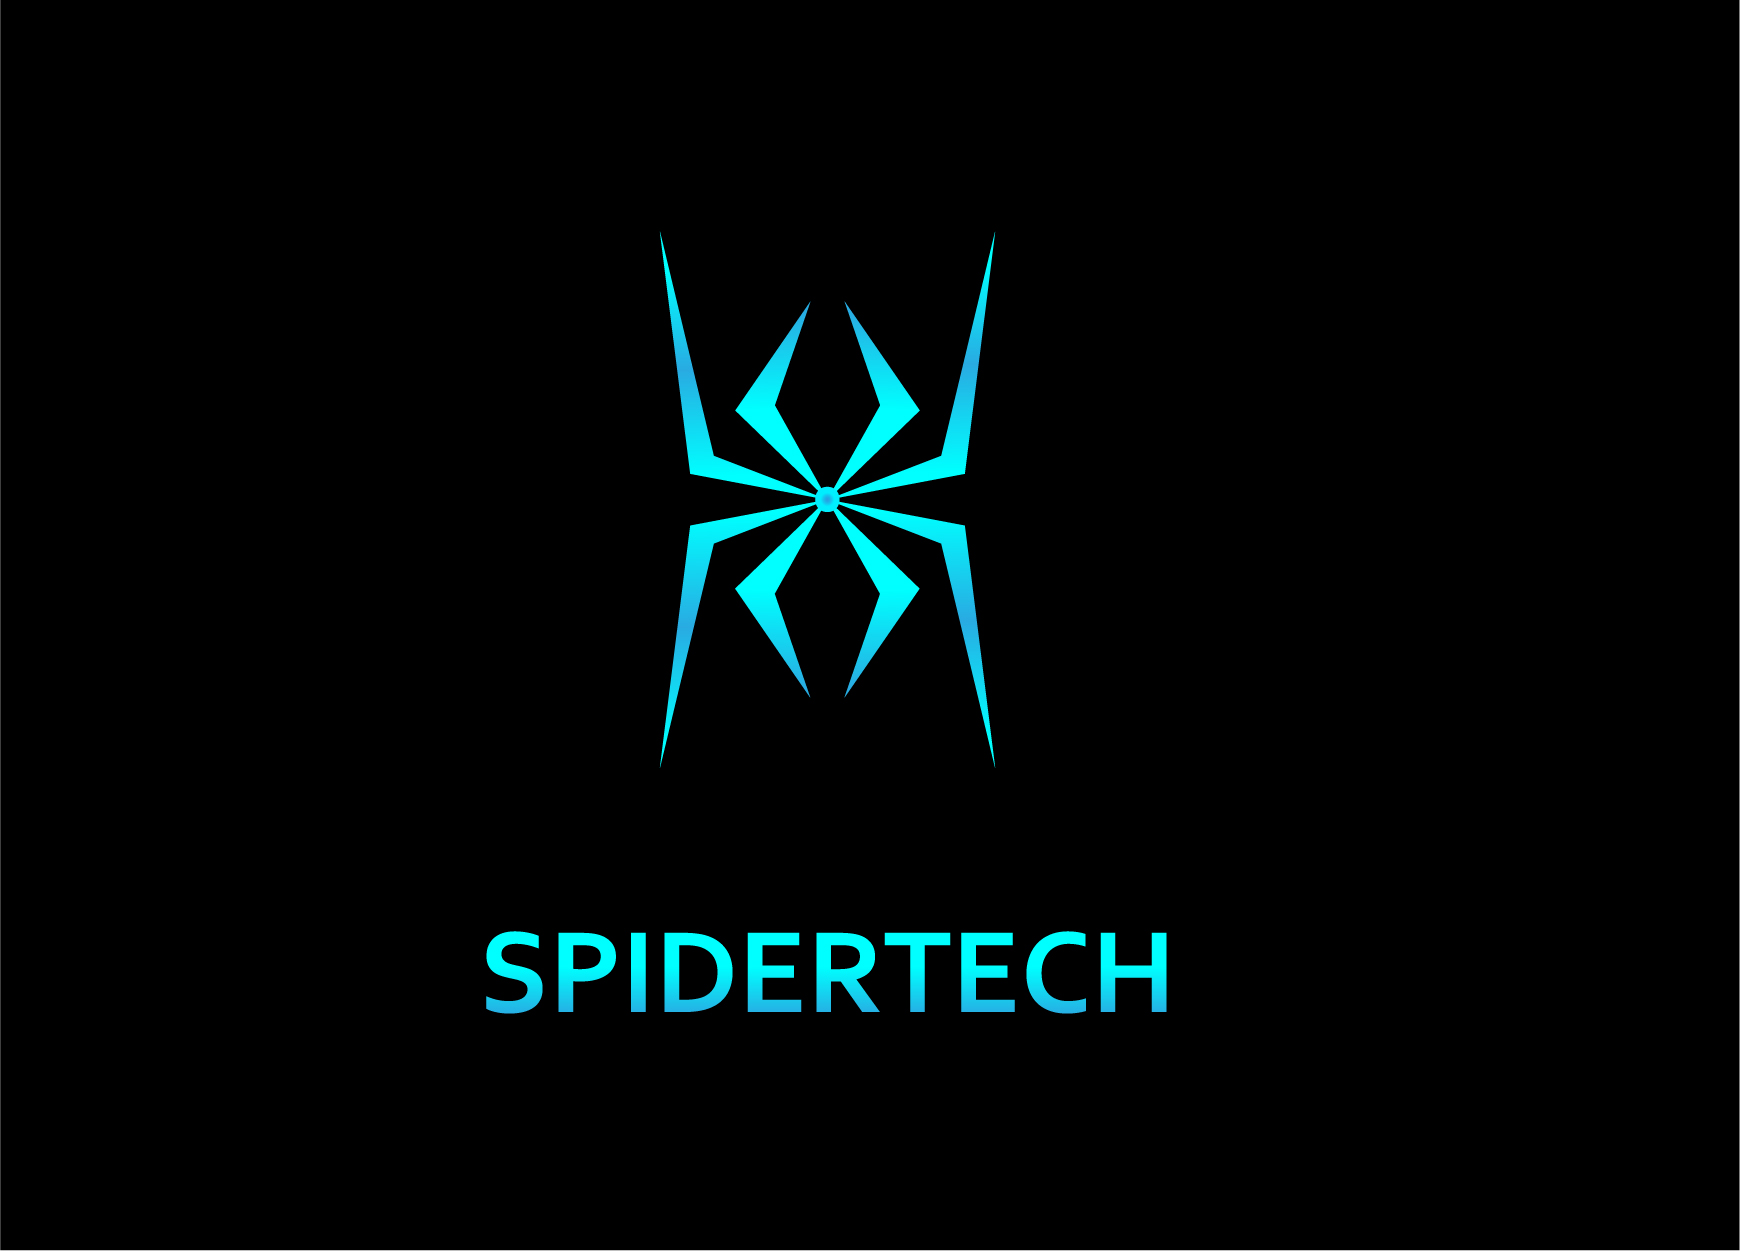 Electric spider logo